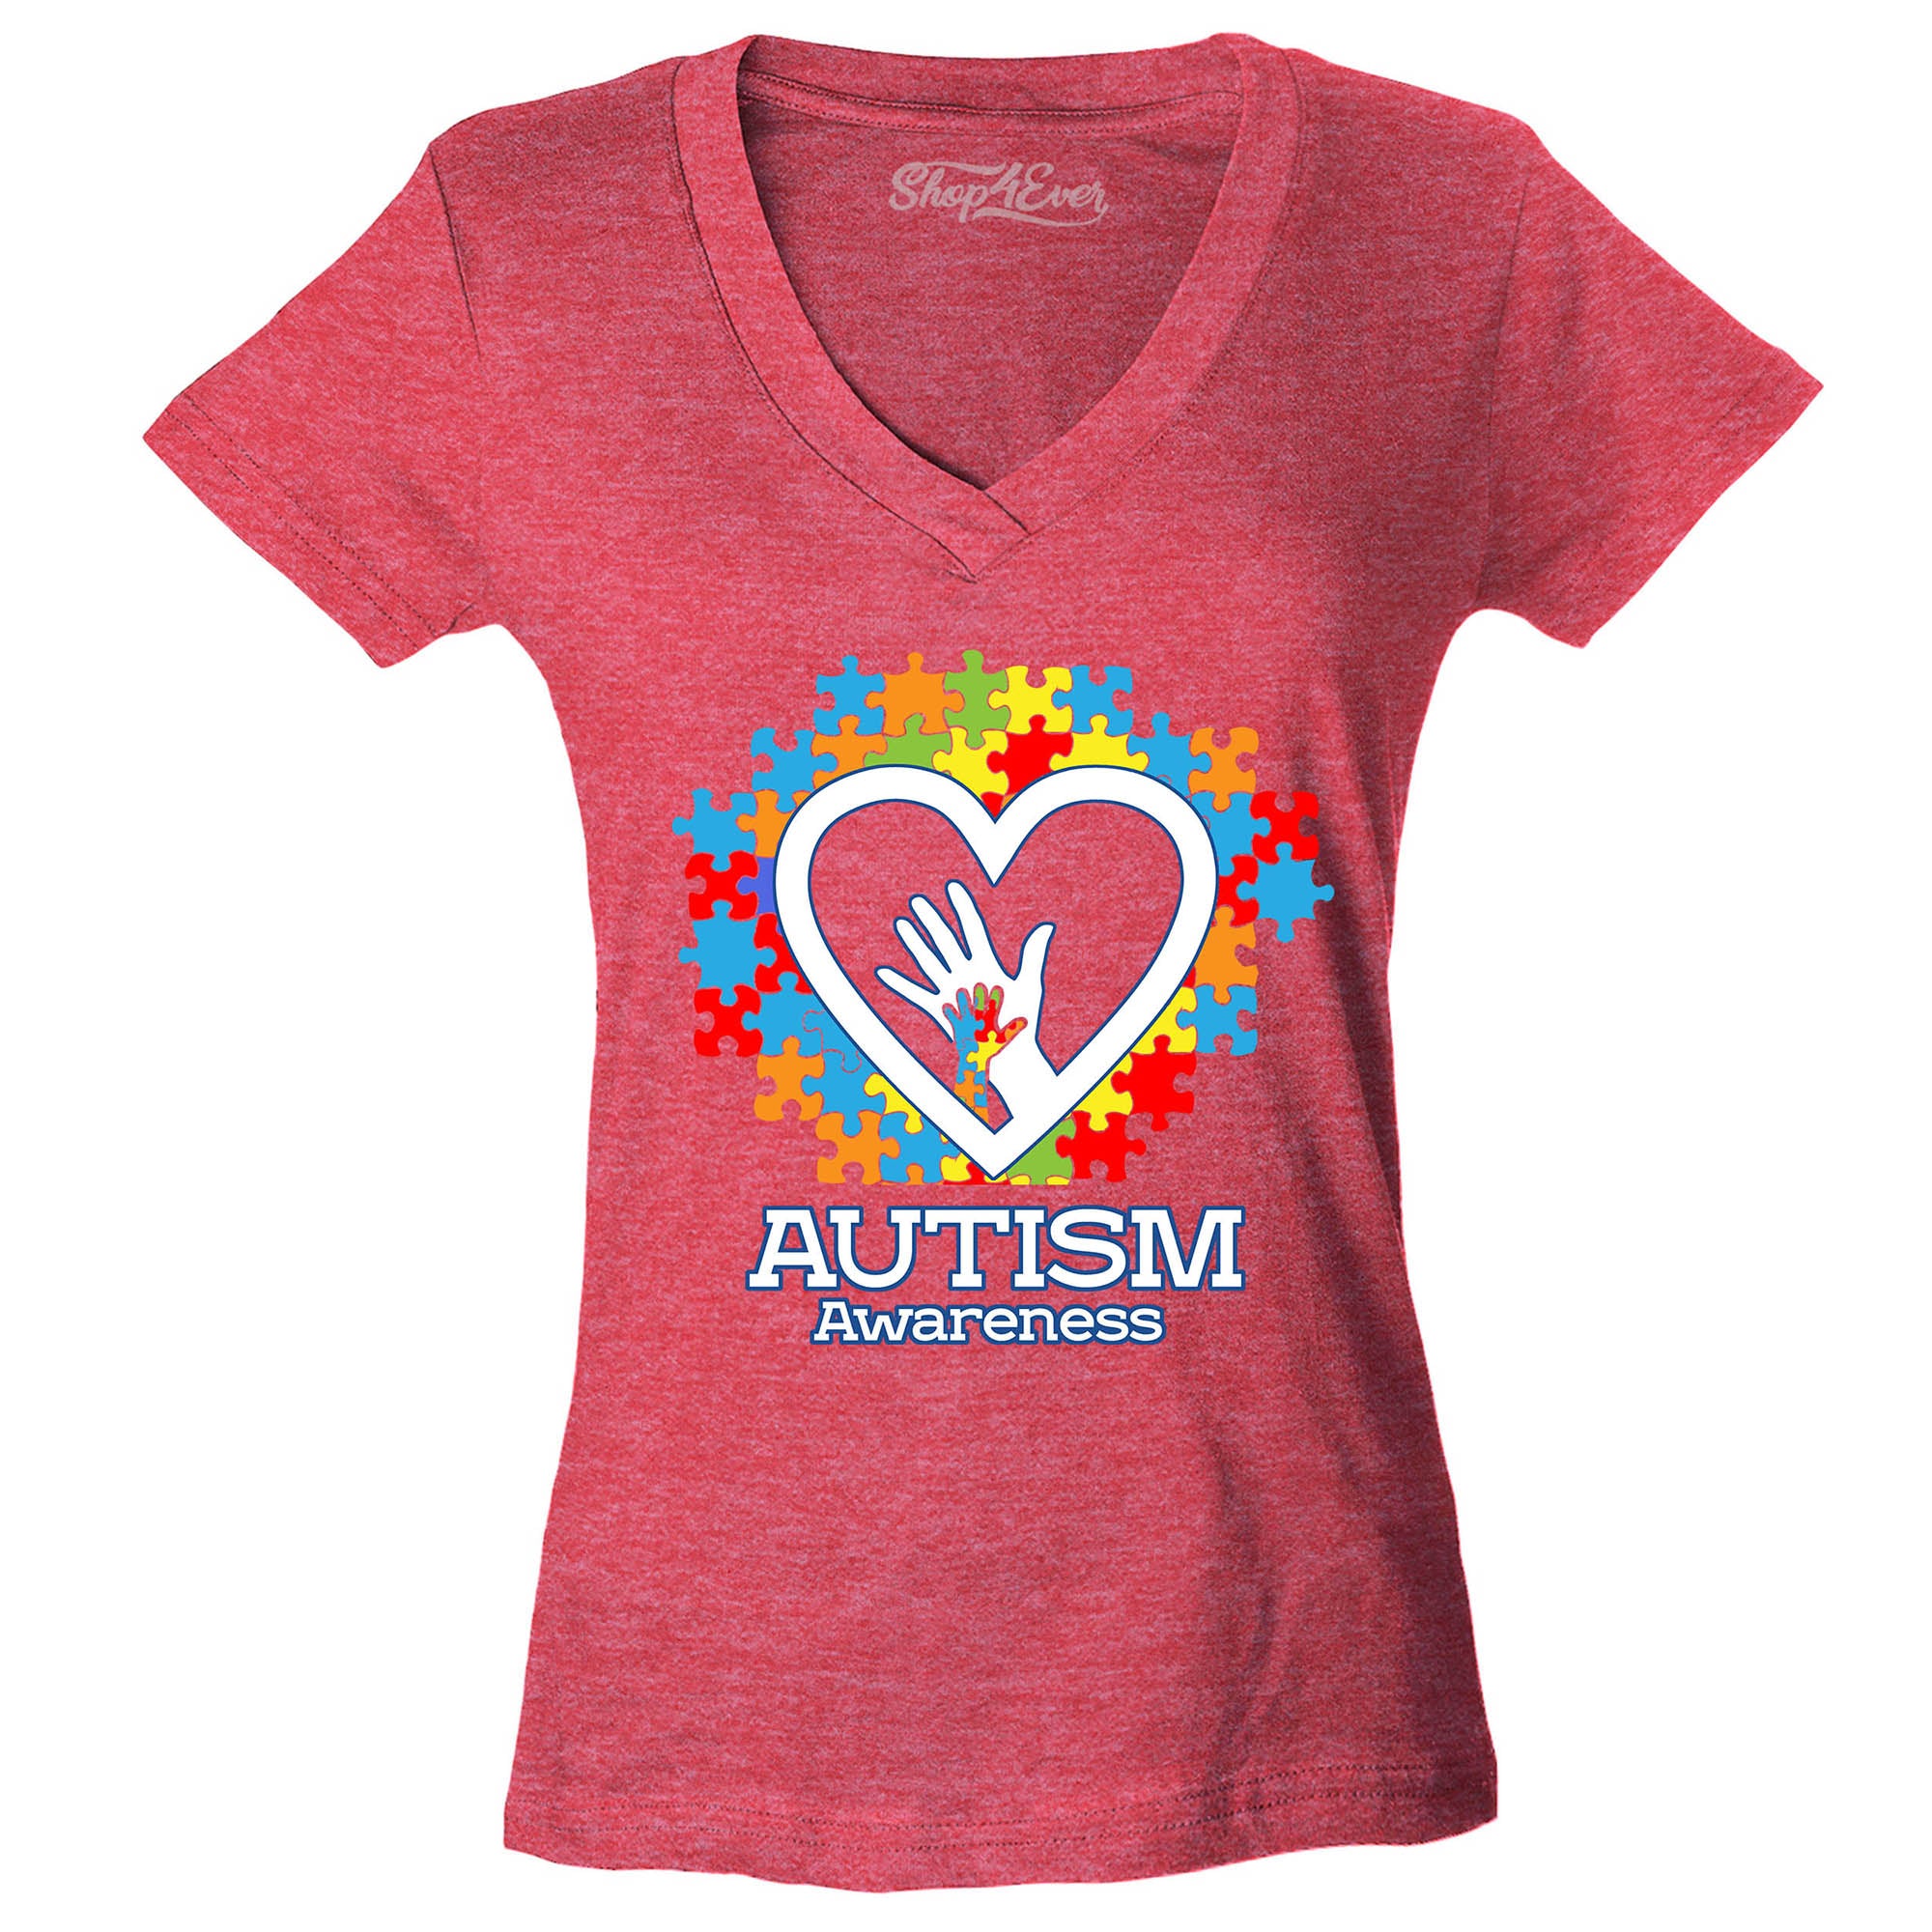 Autism Awareness Hands in Heart Women's V-Neck T-Shirt Slim Fit